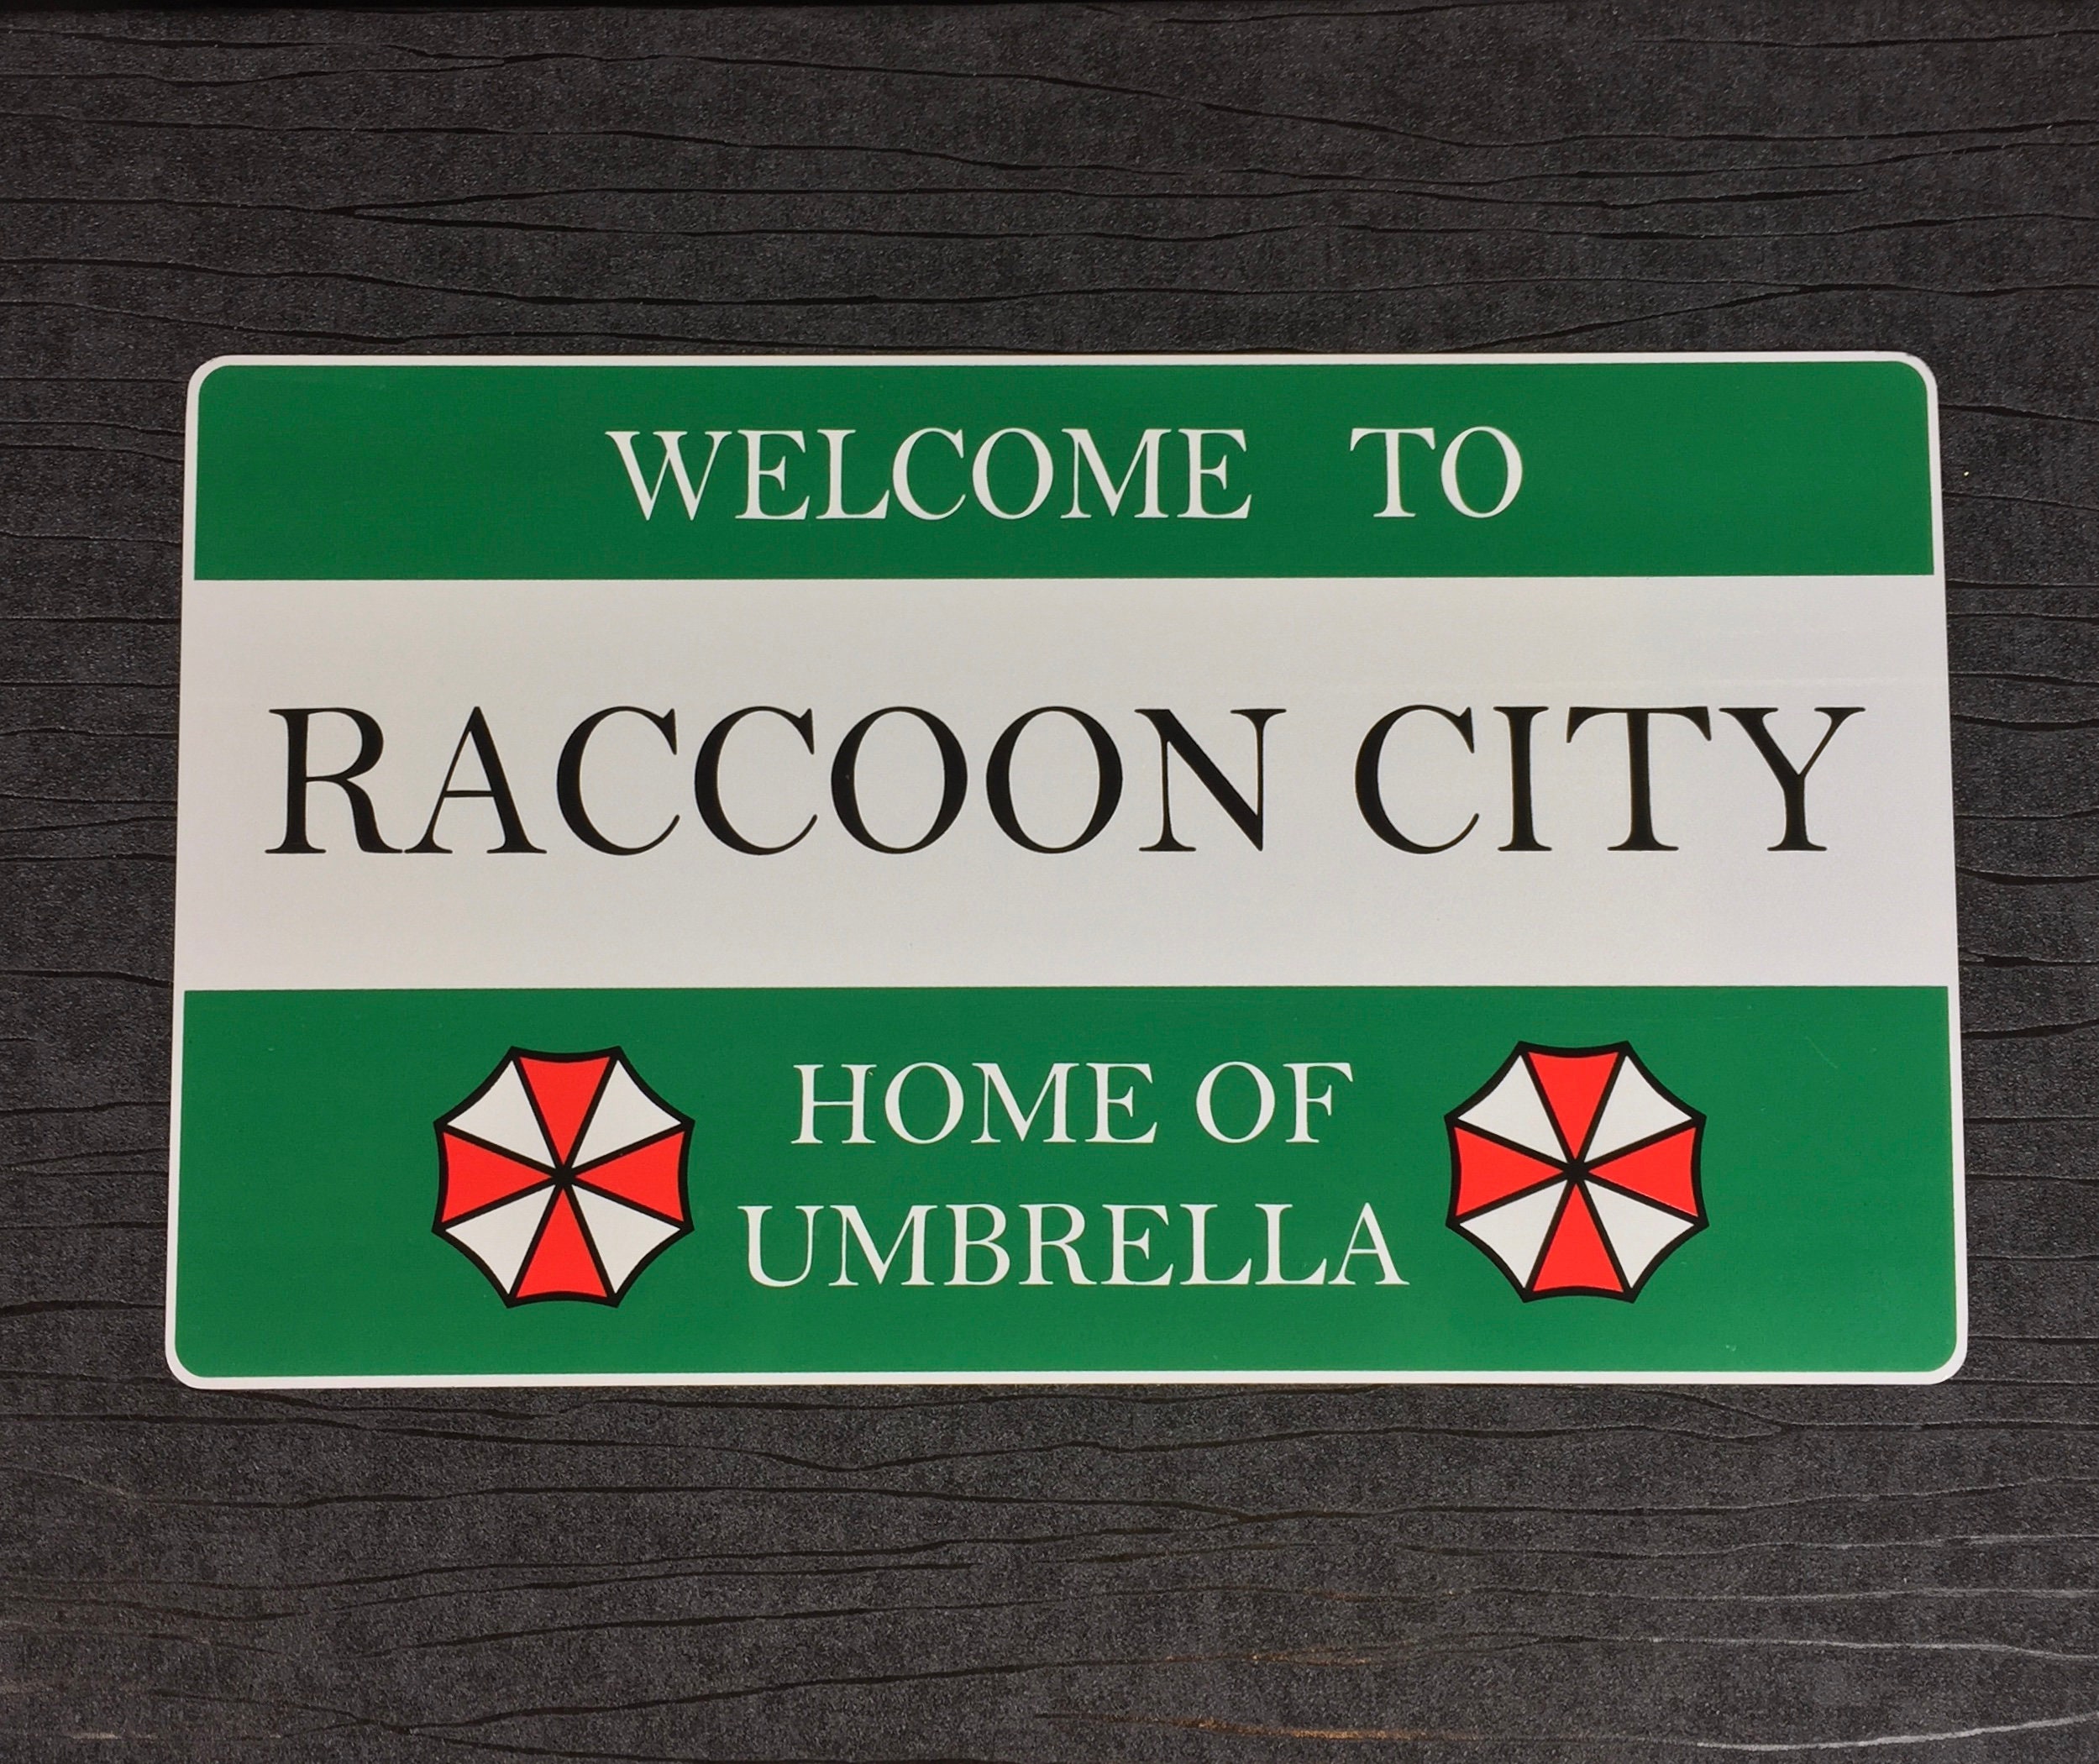 Welcome to raccoon city